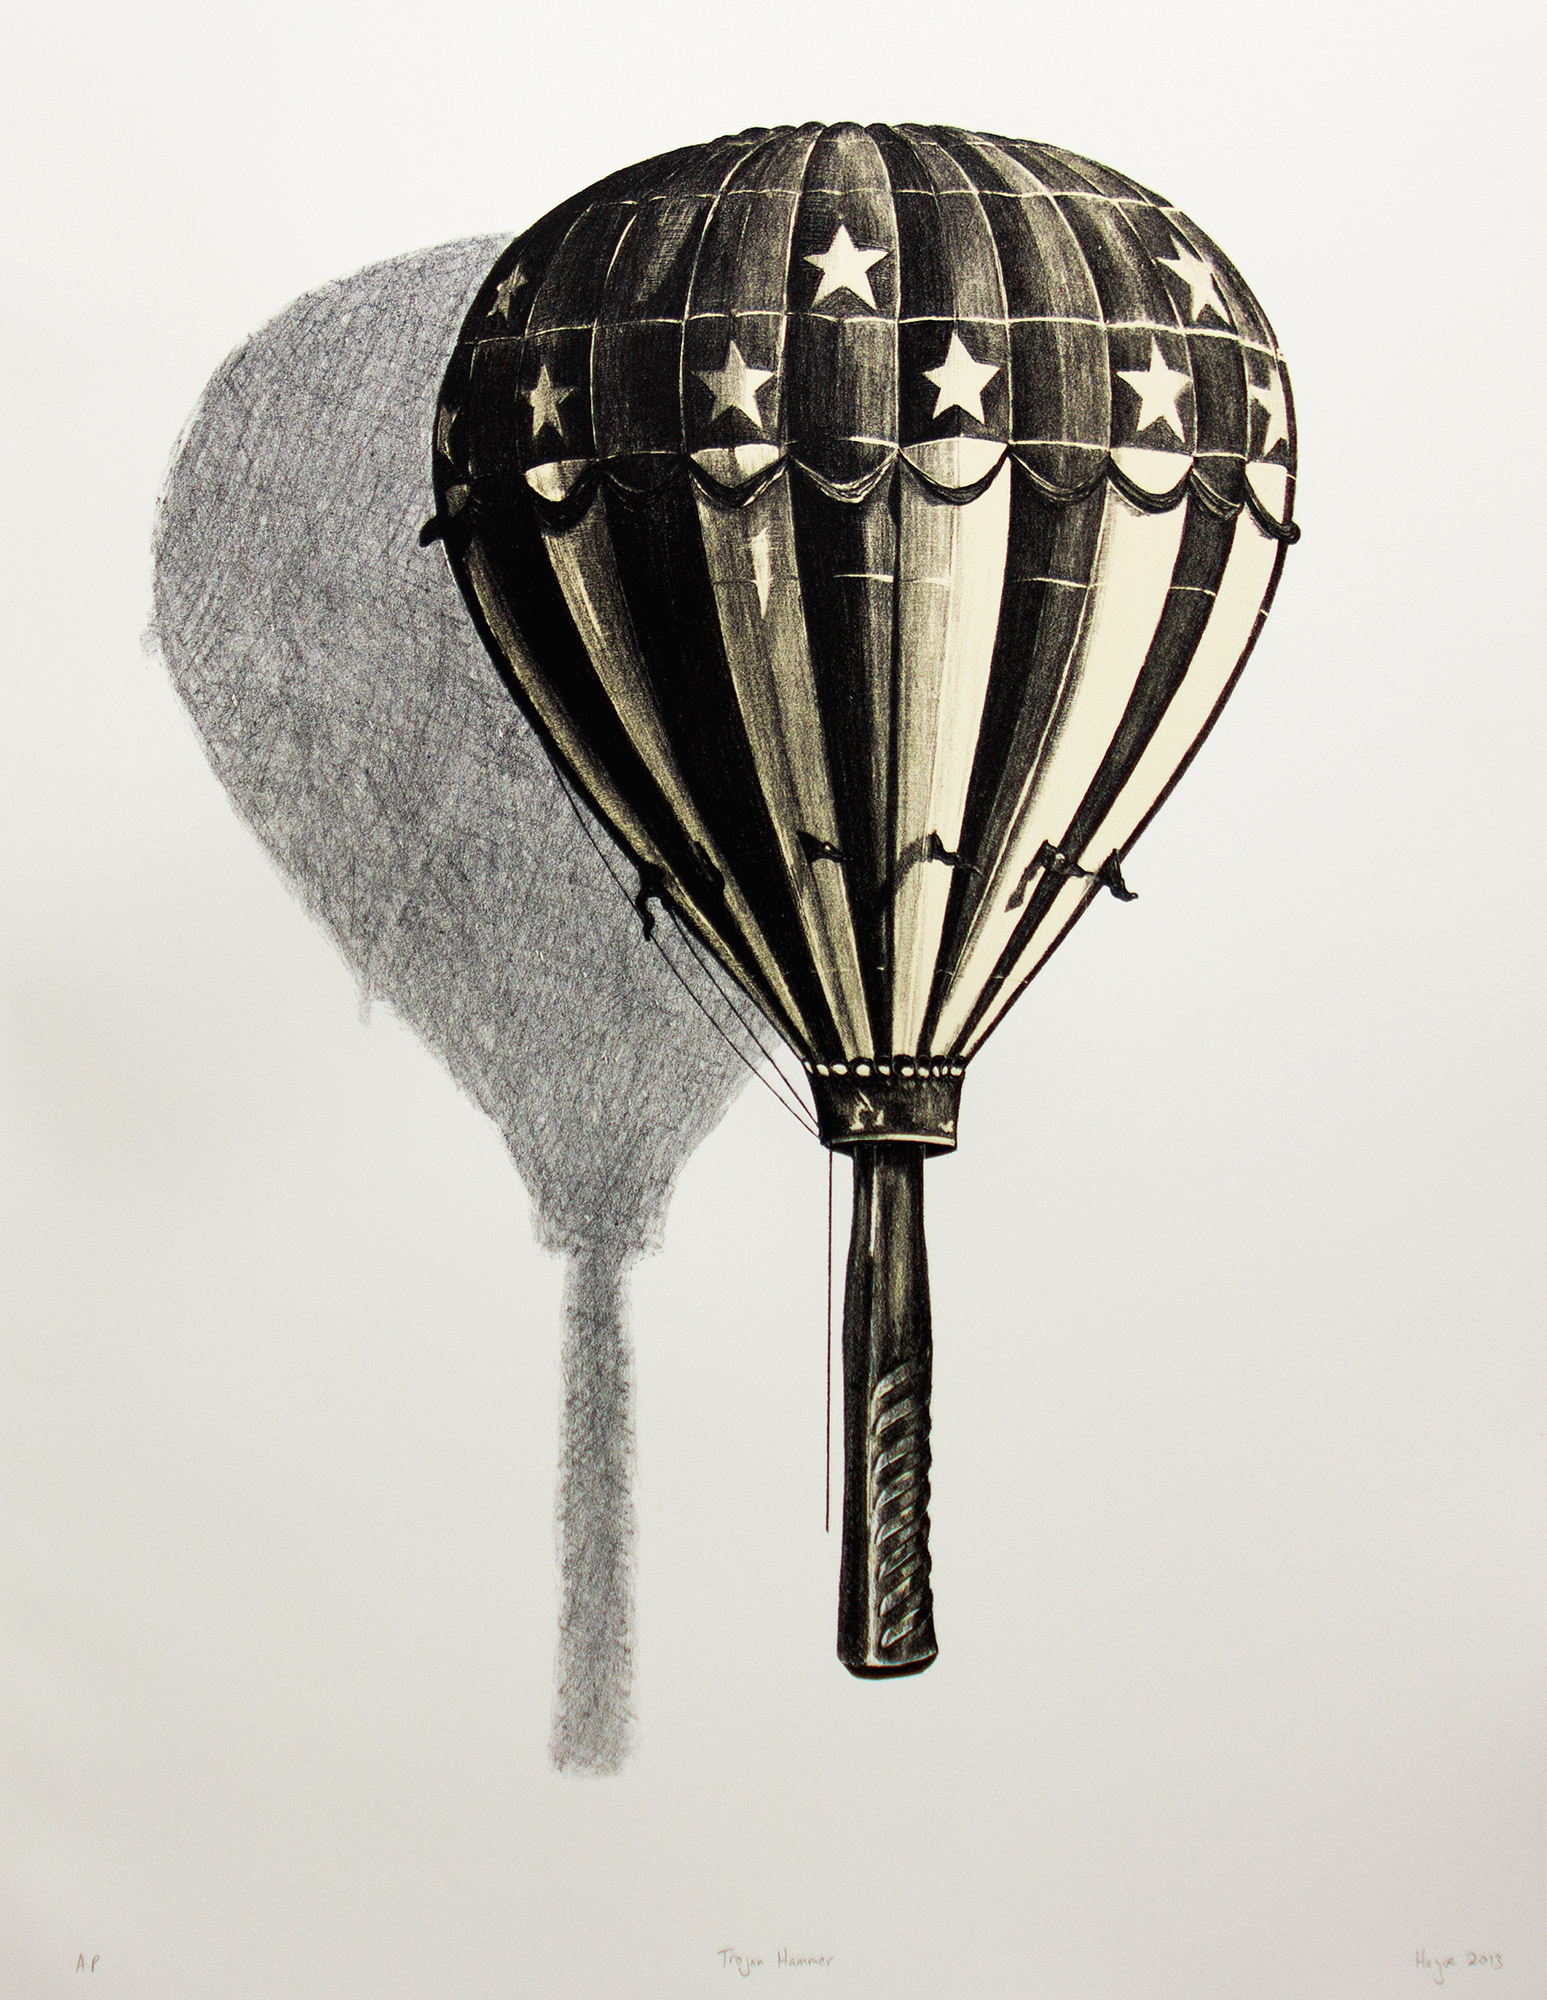 Trojan Hammer (Balloon). 2013